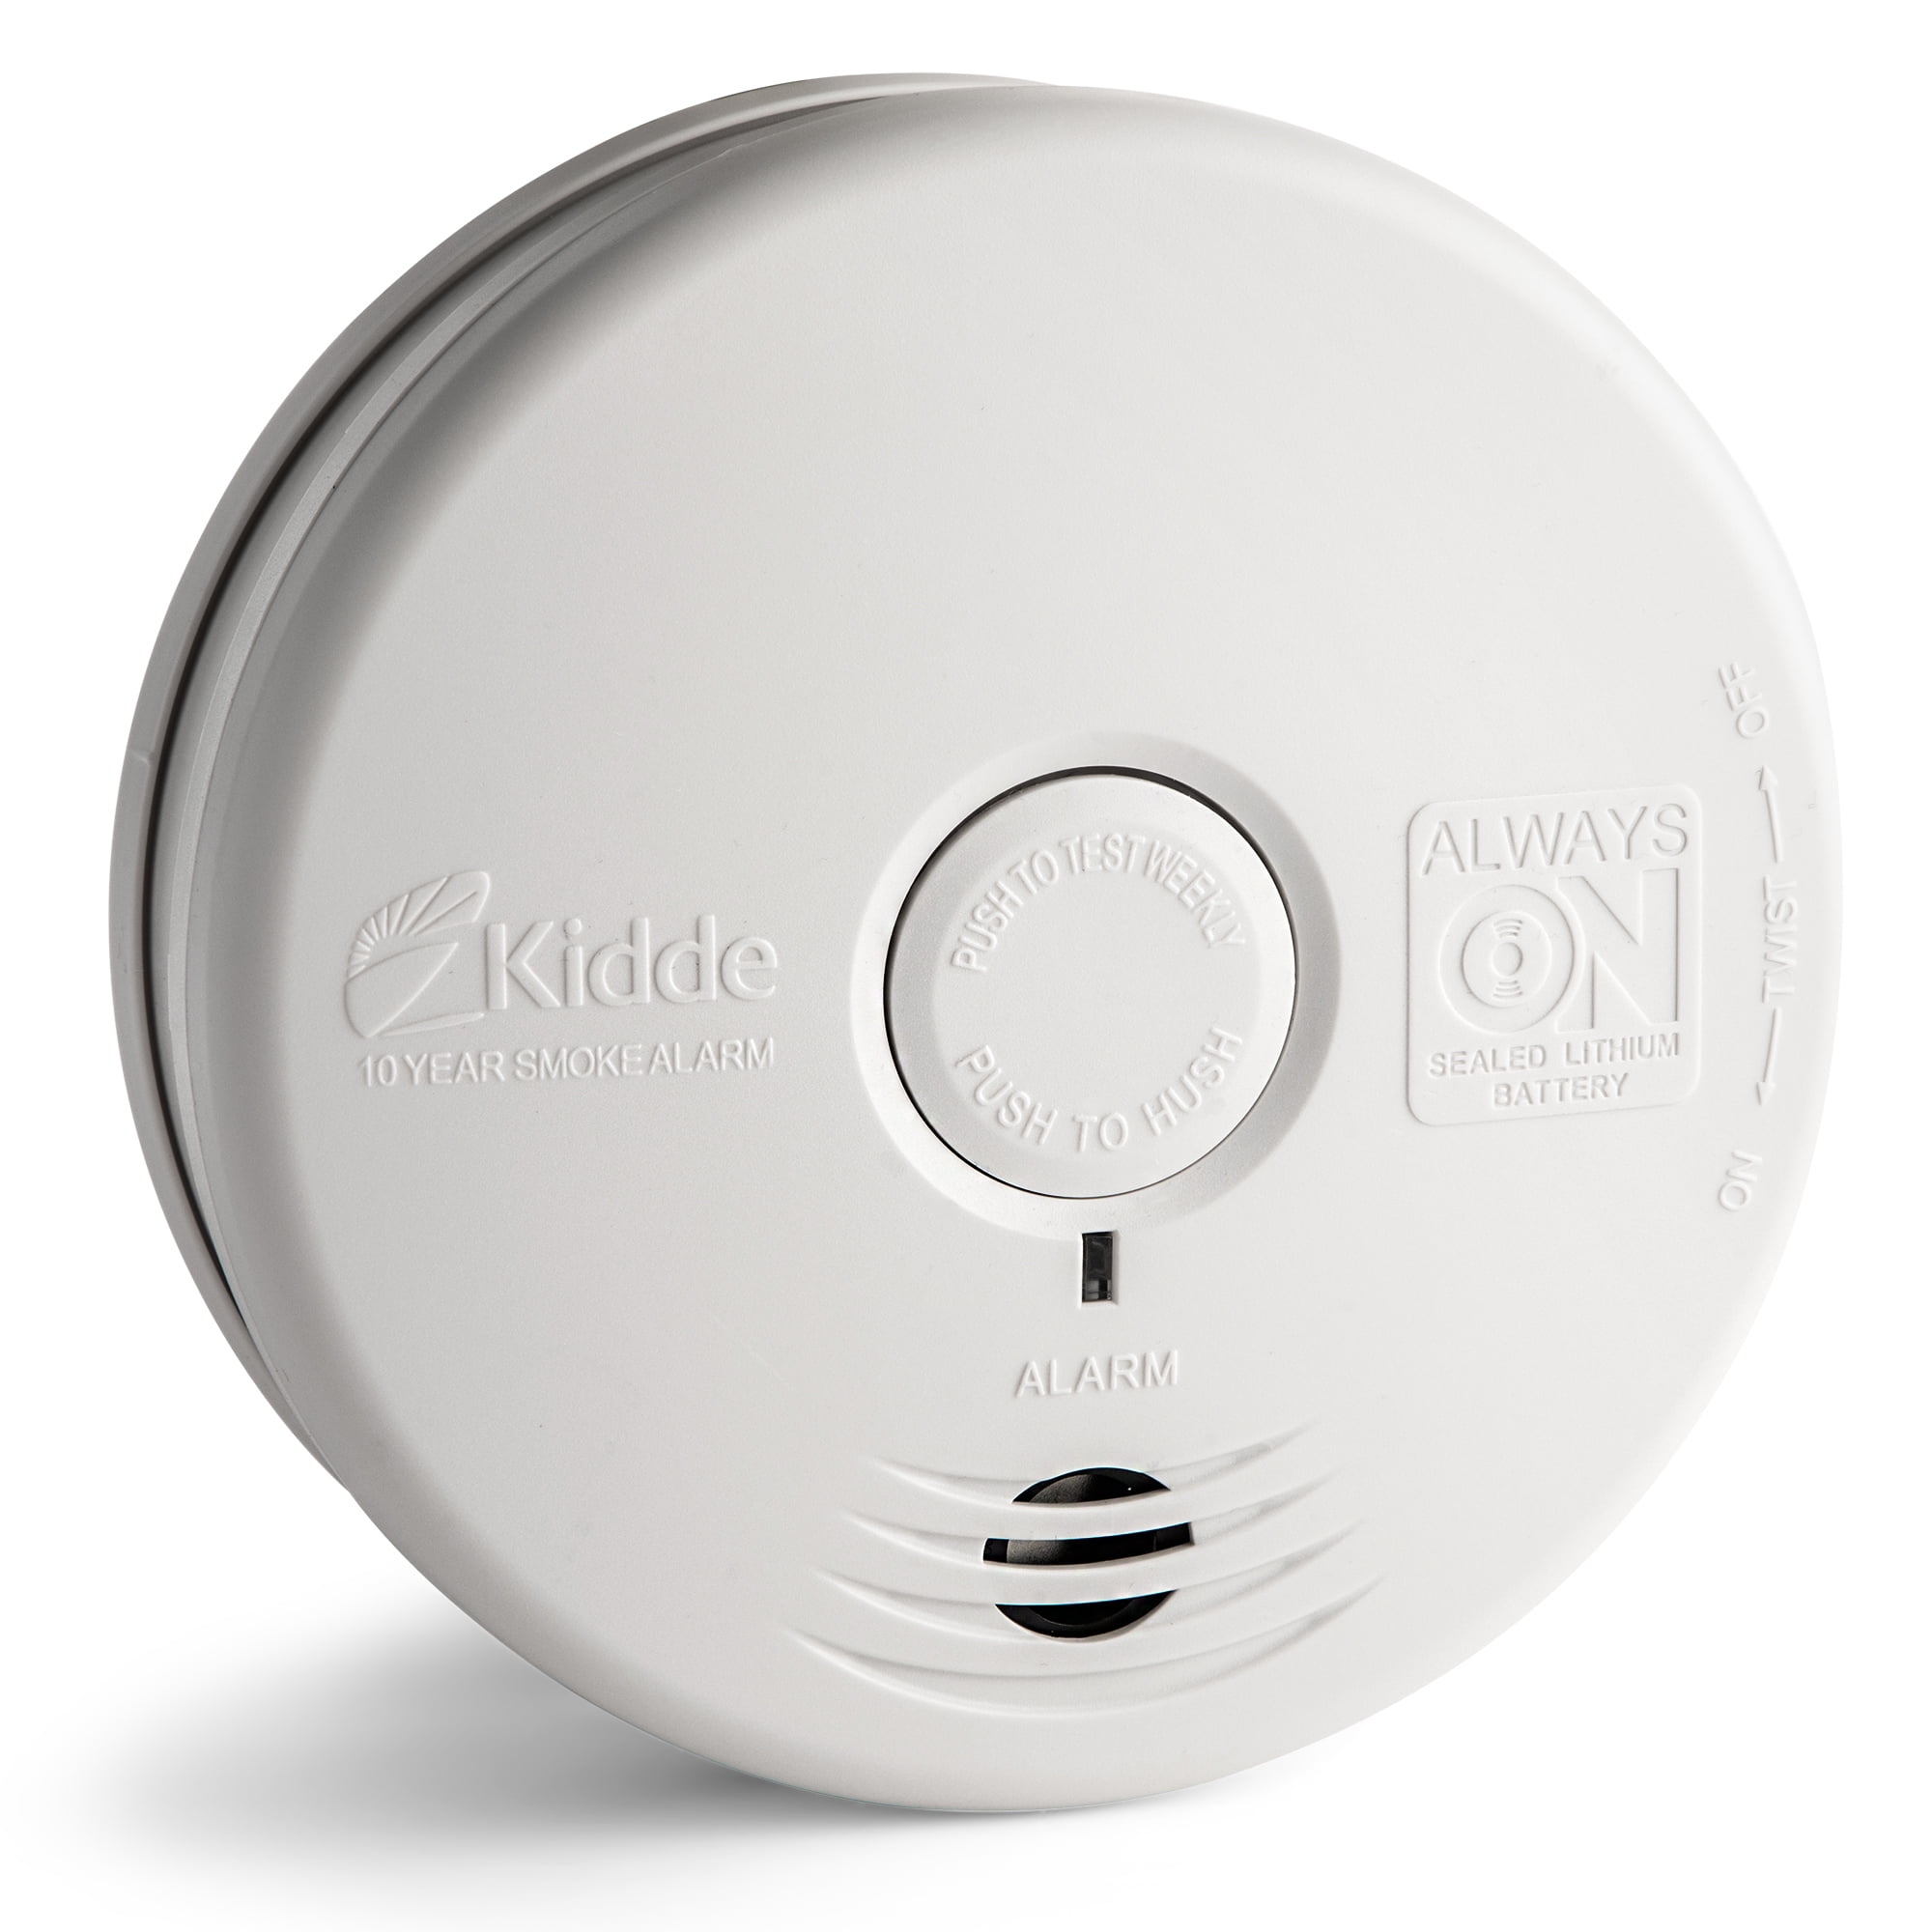 Kidde P3010L Worry-Free Living Area Photoelectric Smoke Alarm /10 YEAR BATTERY!! 